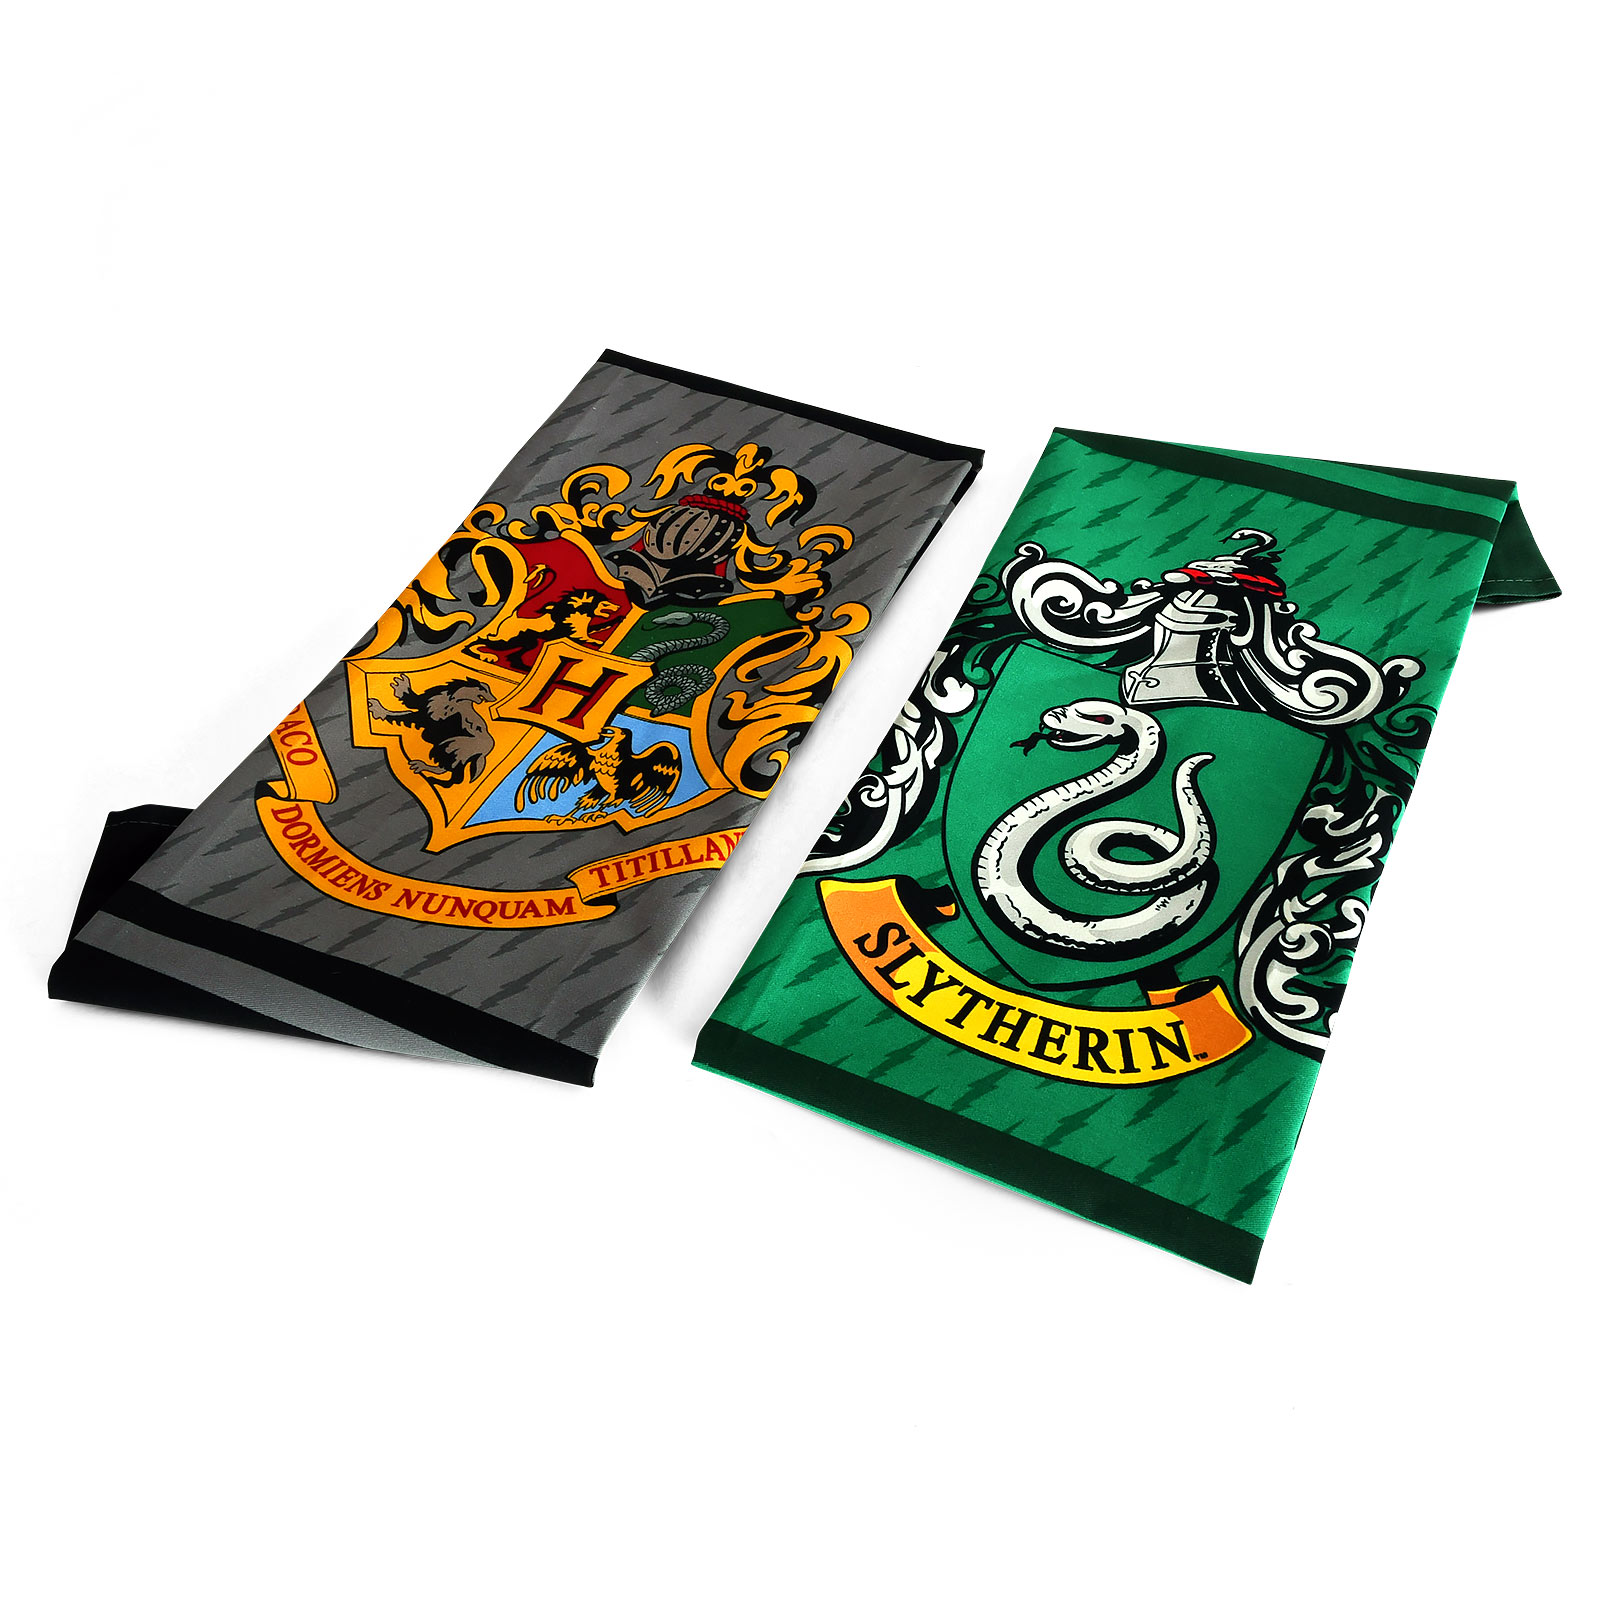 Harry Potter - Slytherin & Hogwarts Theedoek Set